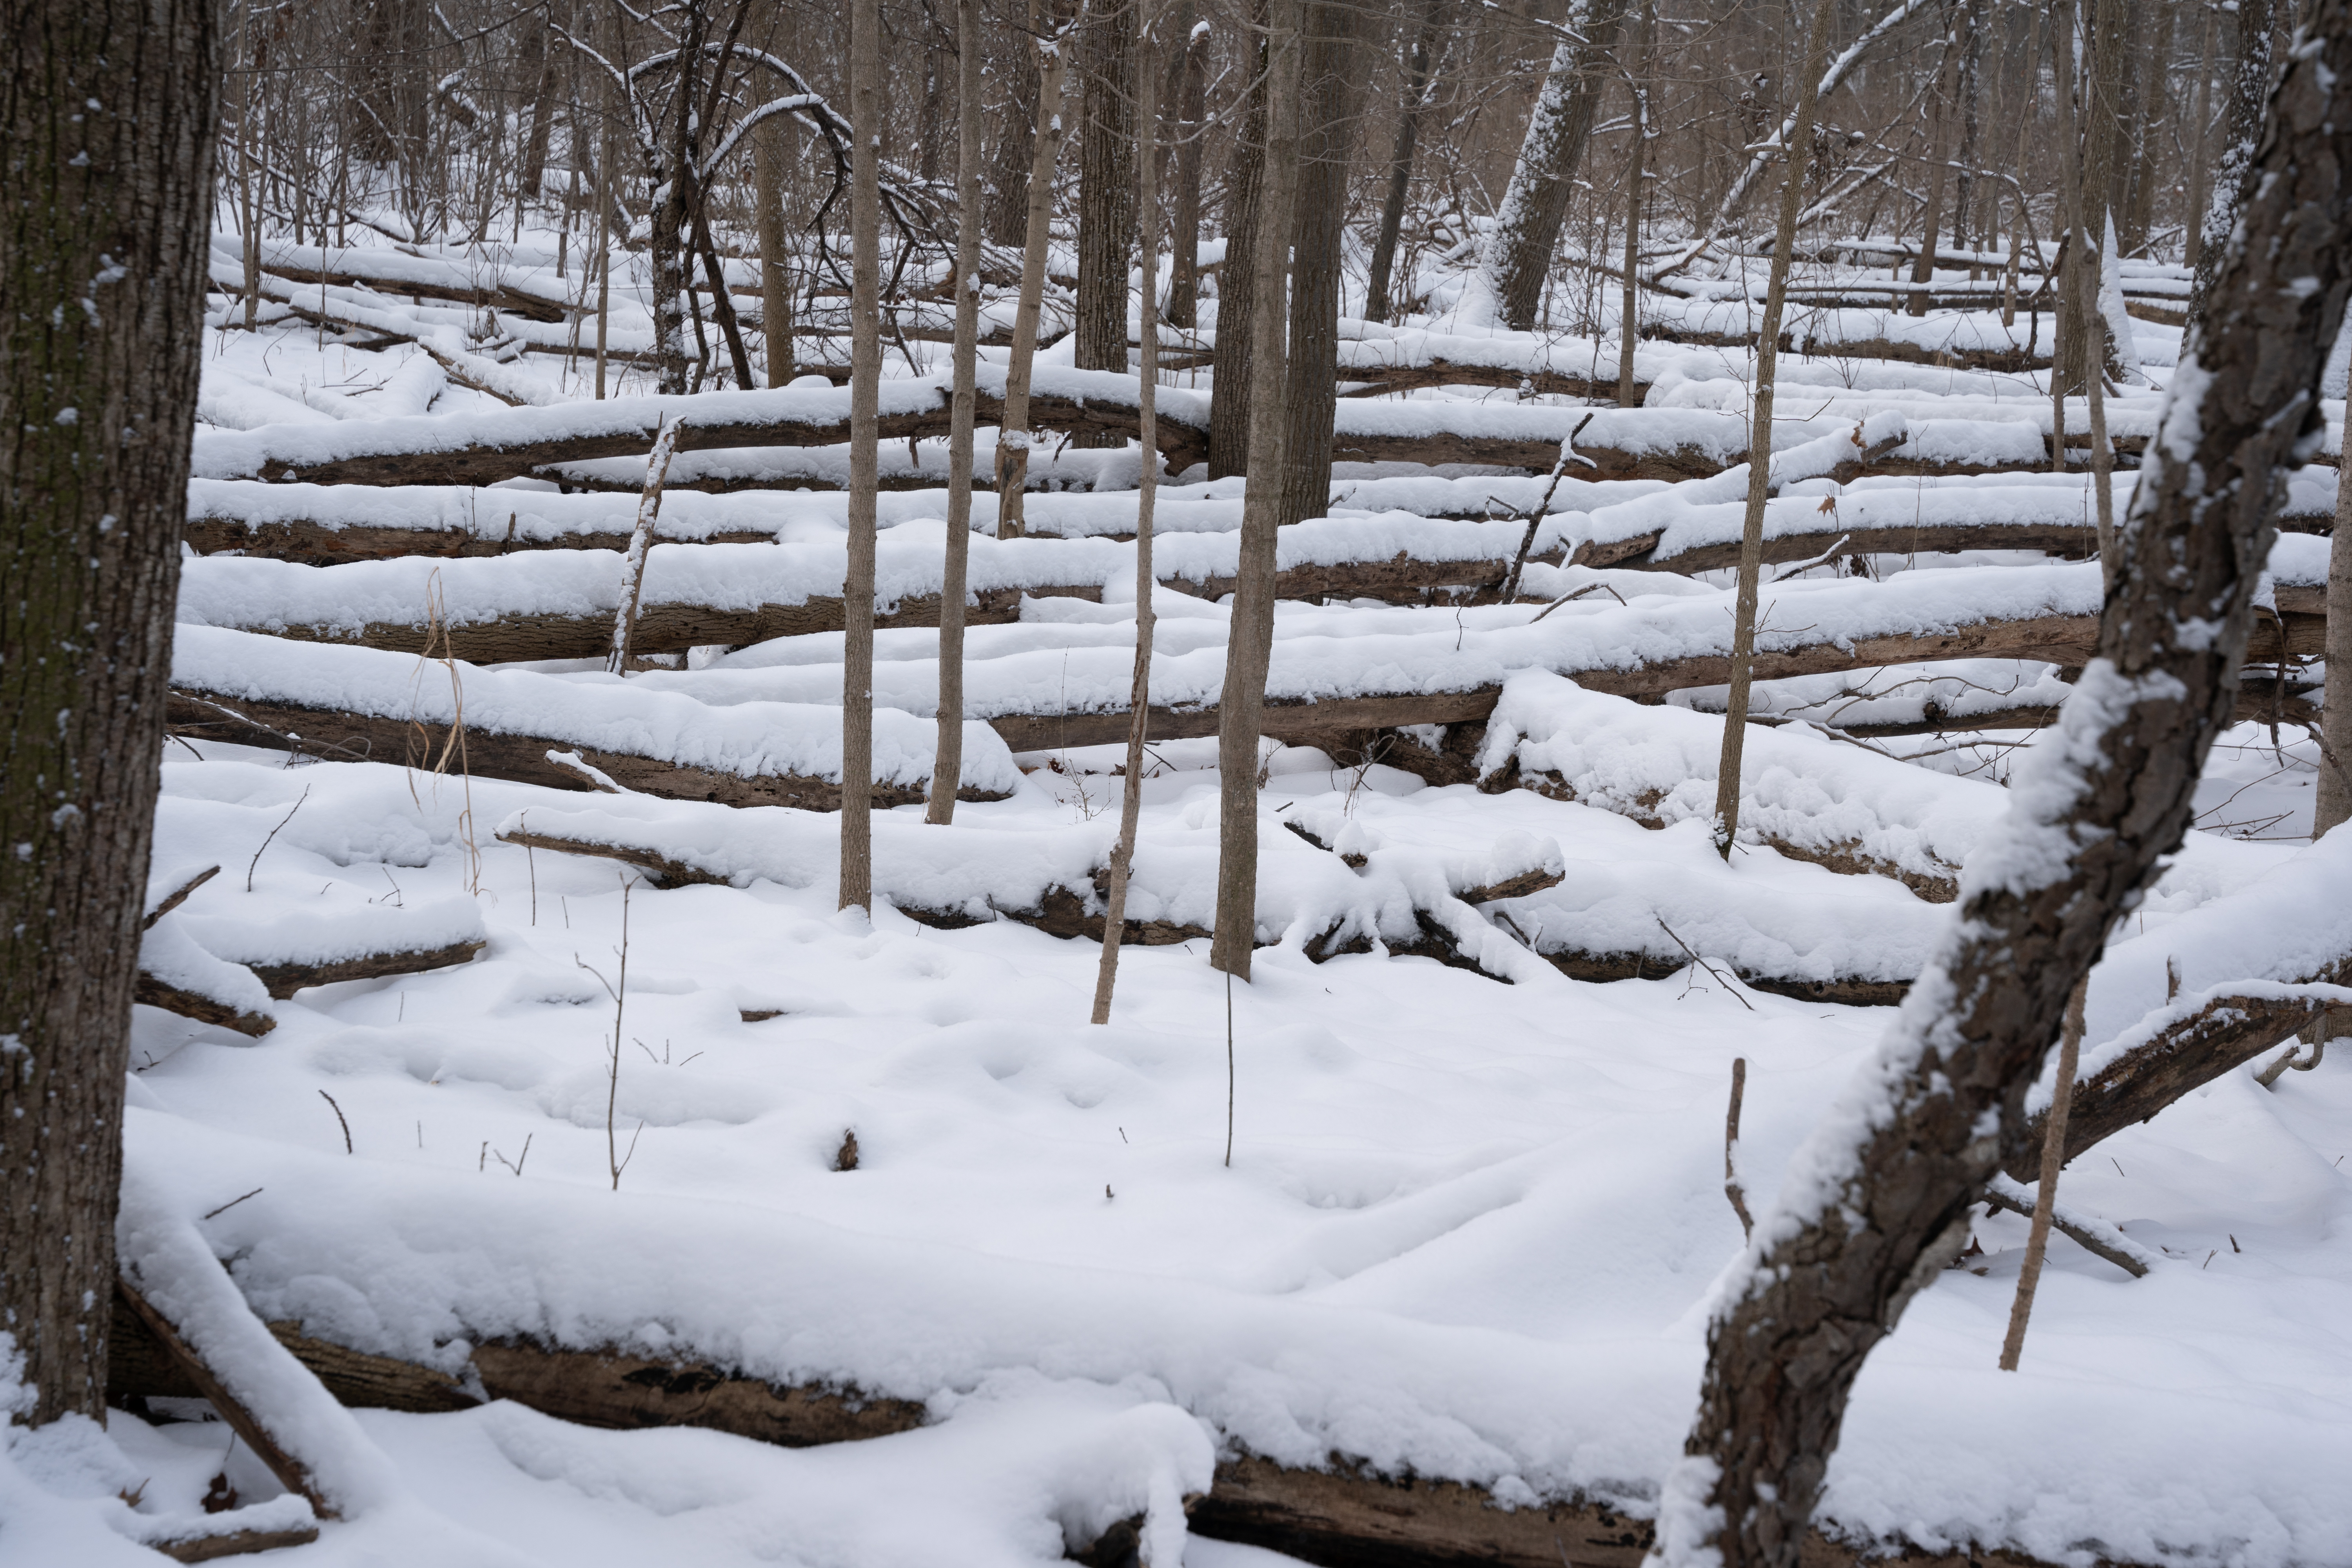 January 17, 2022 – Winter Trees – Barton Arboretum and Nature Preserve